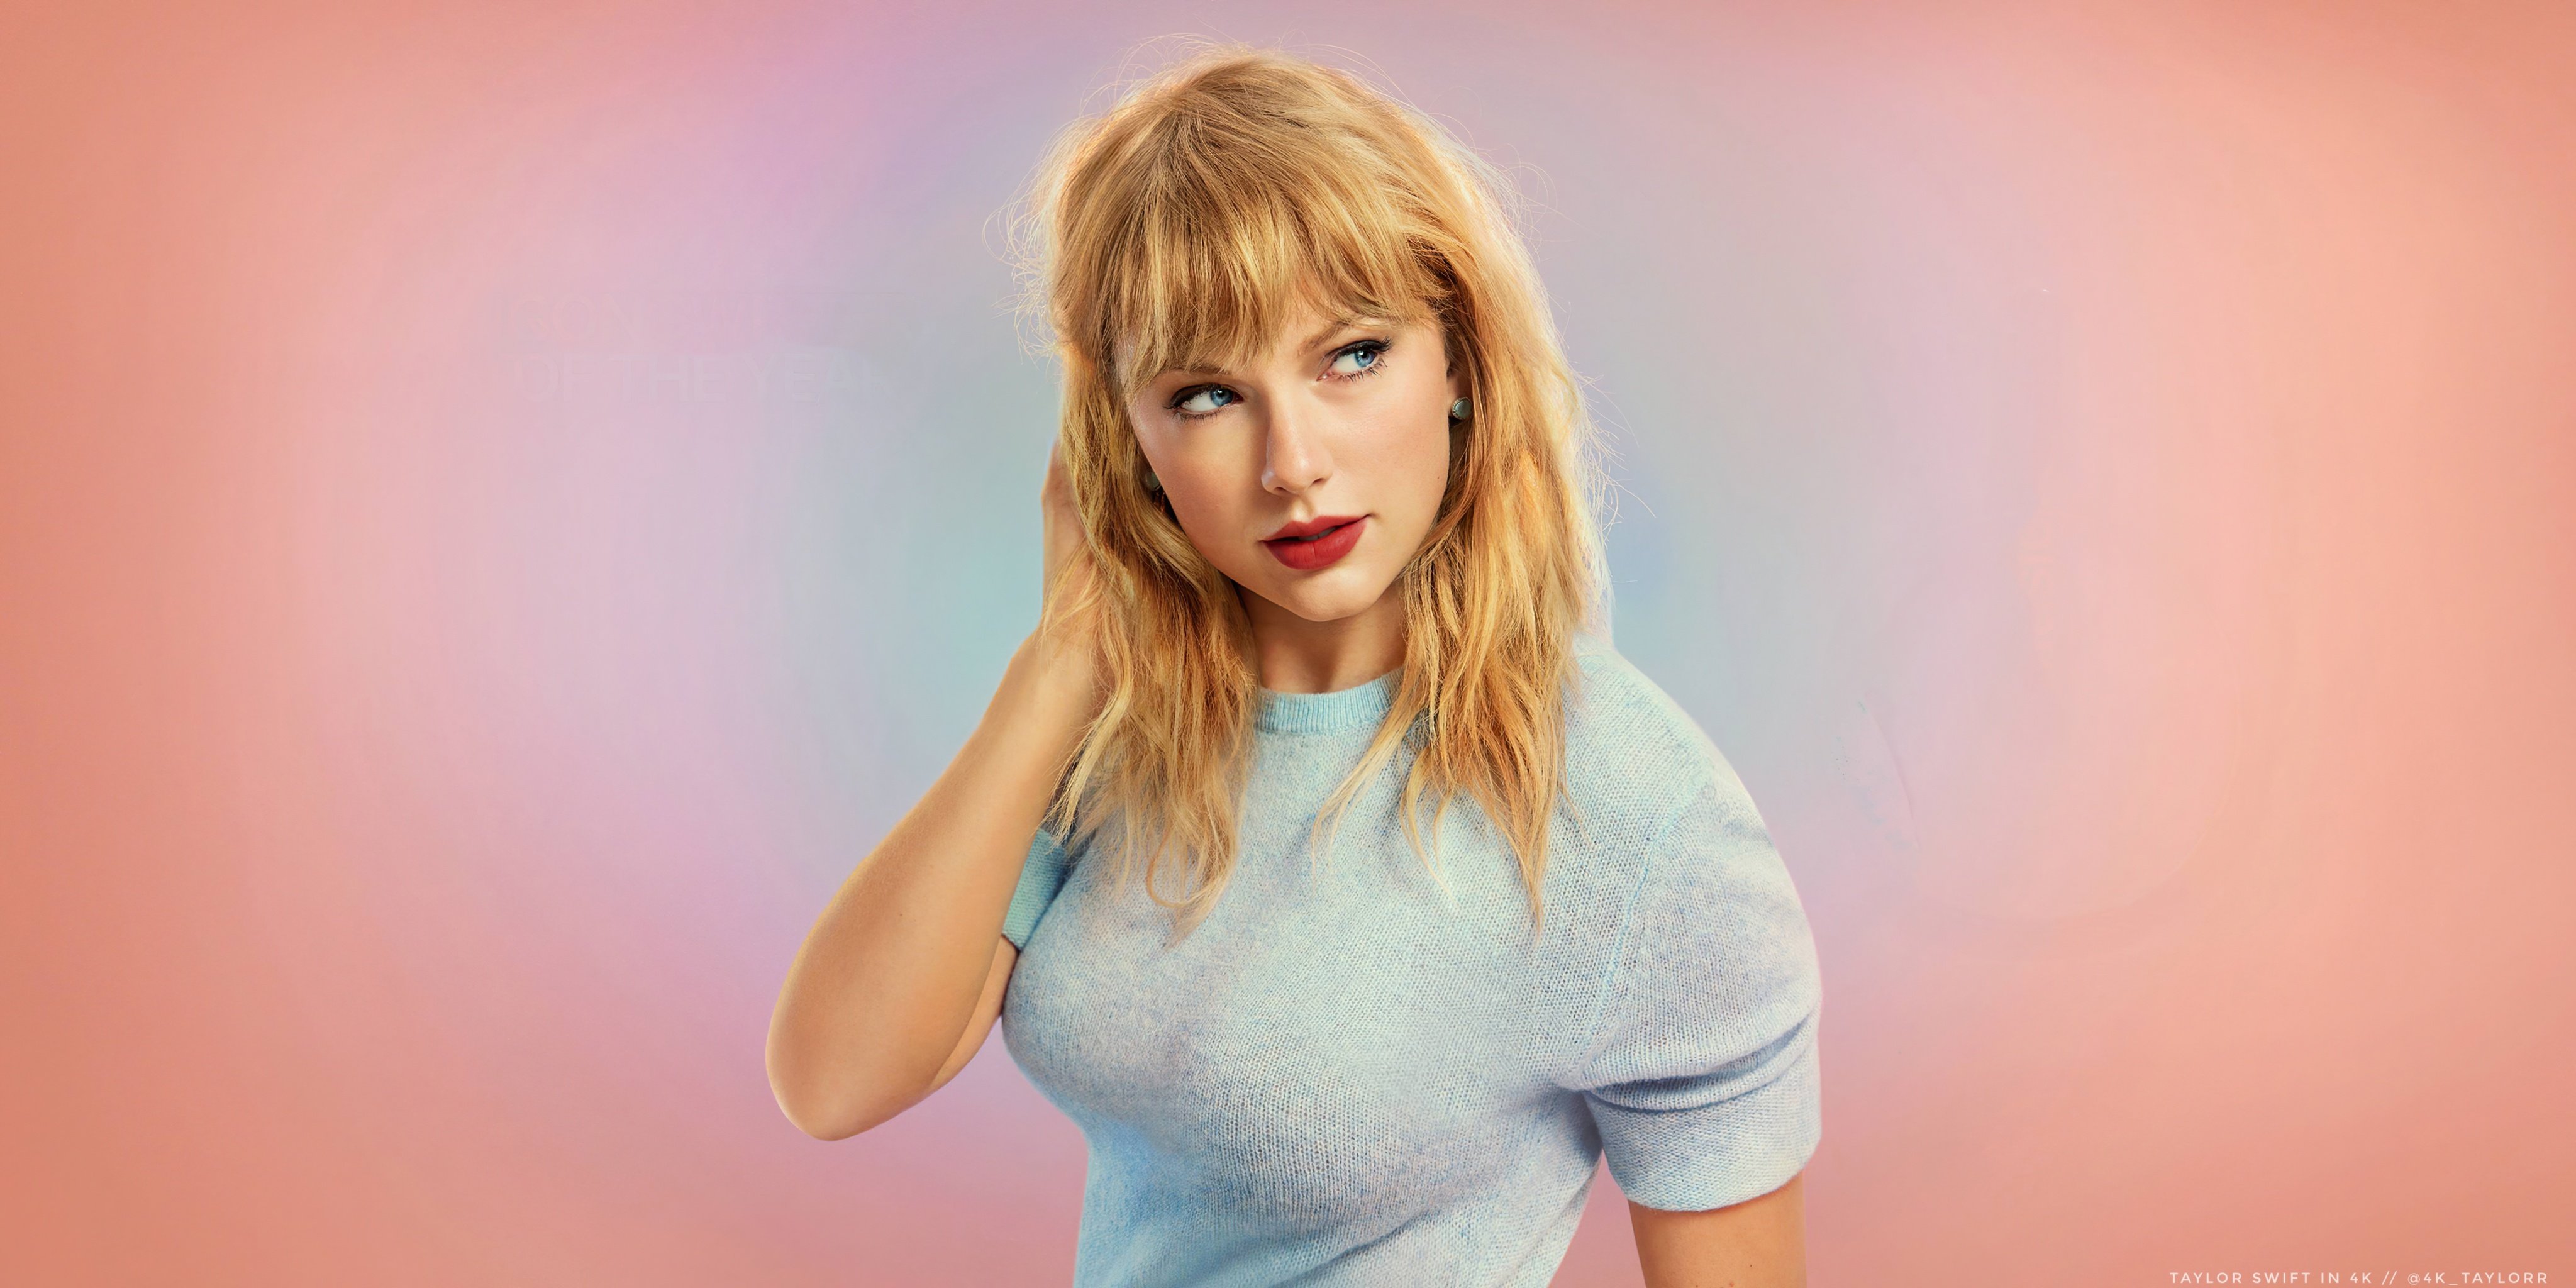 Taylor Swift in 4k Swift [Apple Music AD] Mobile and Deskk Wallpaper